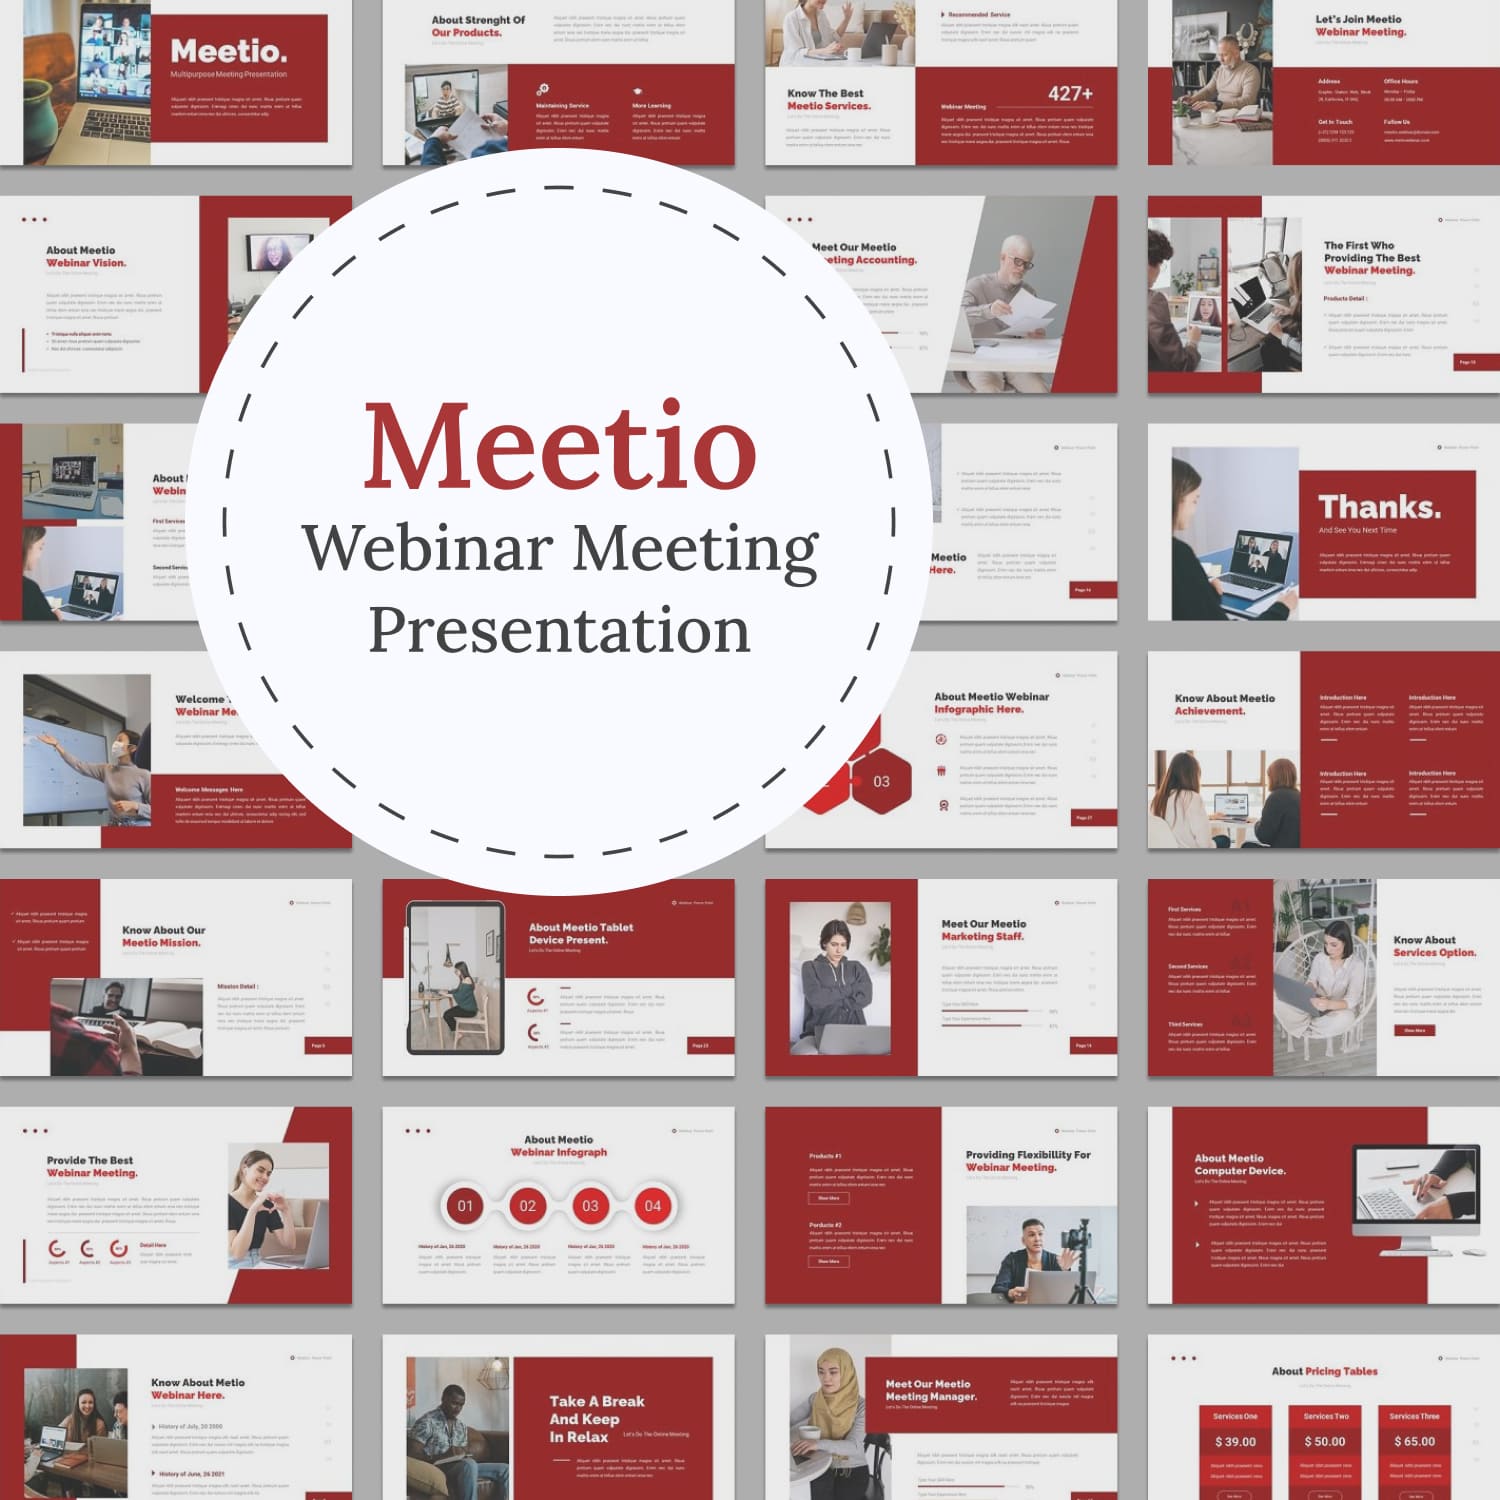 Meetio Webinar Meeting Presentation.